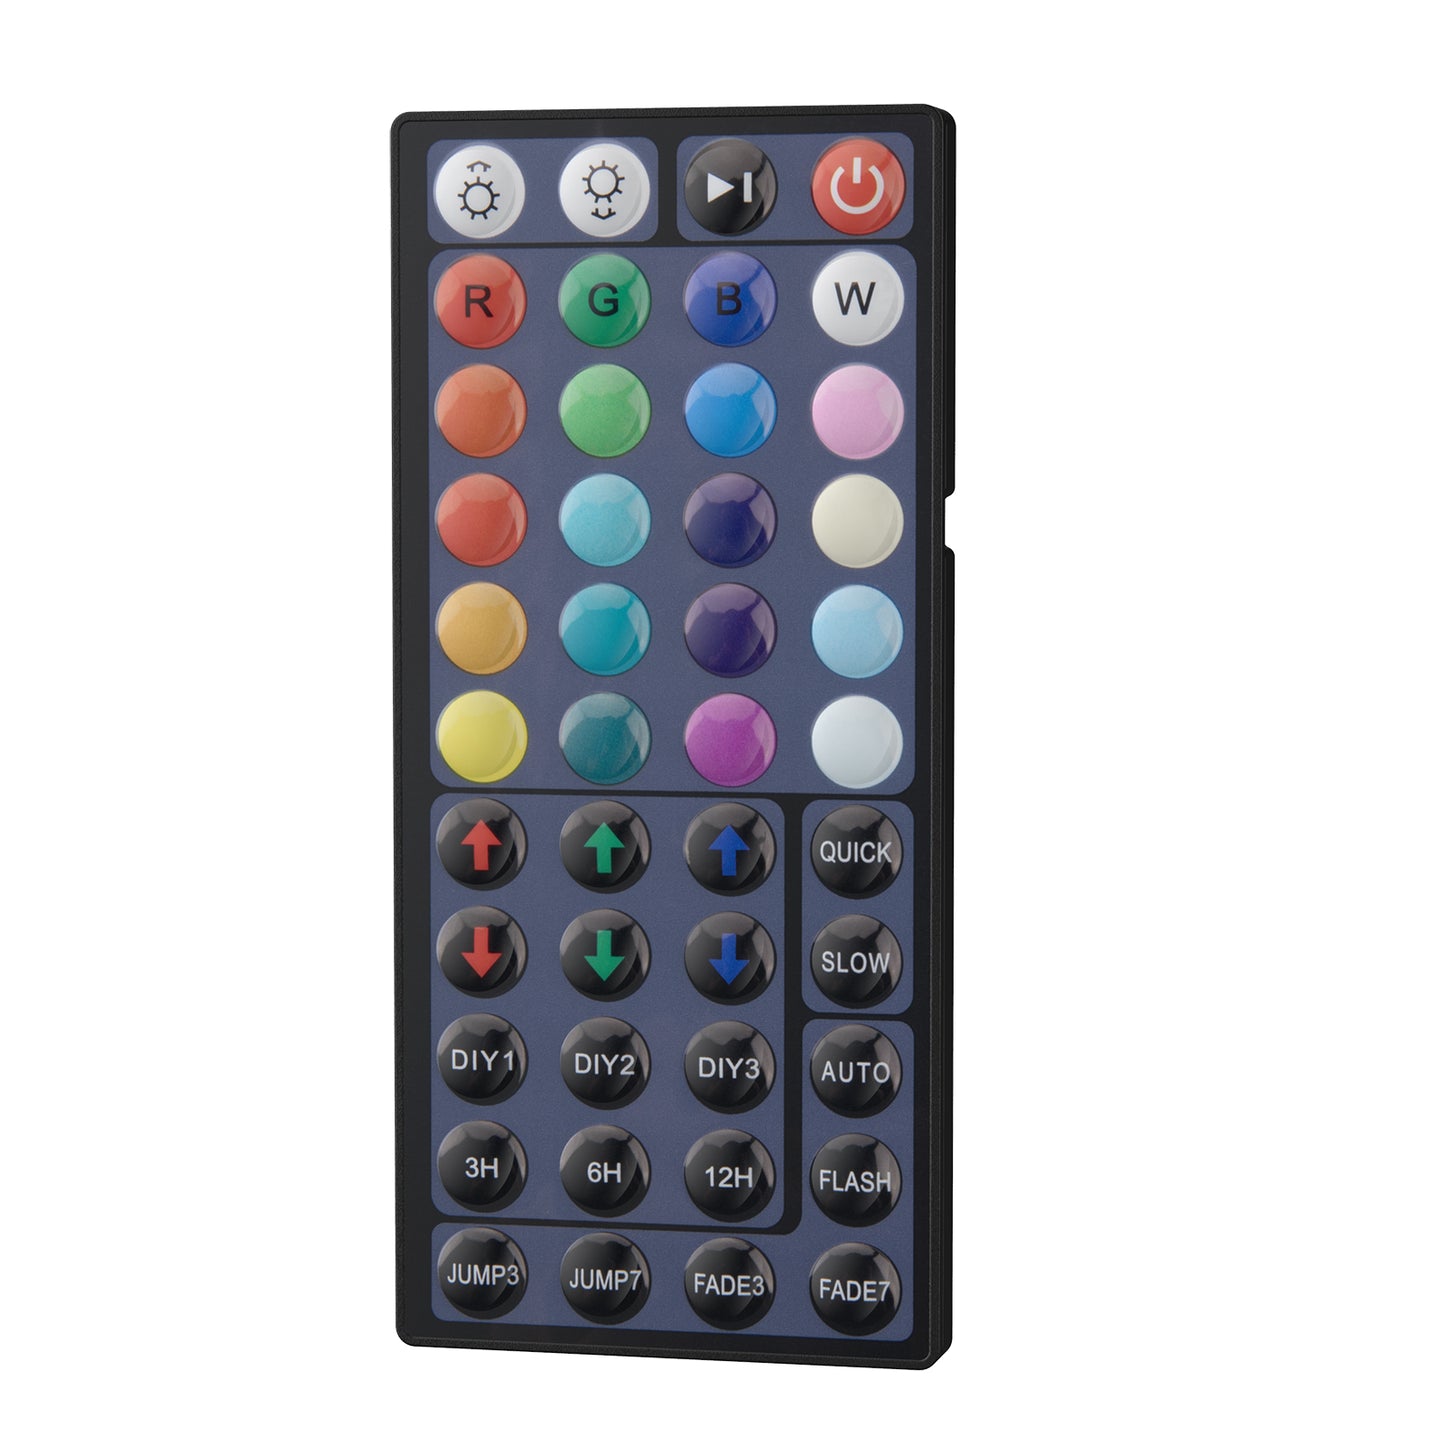 LE 44 Key Remote Controller of RGB LED Strip, Static, Flash